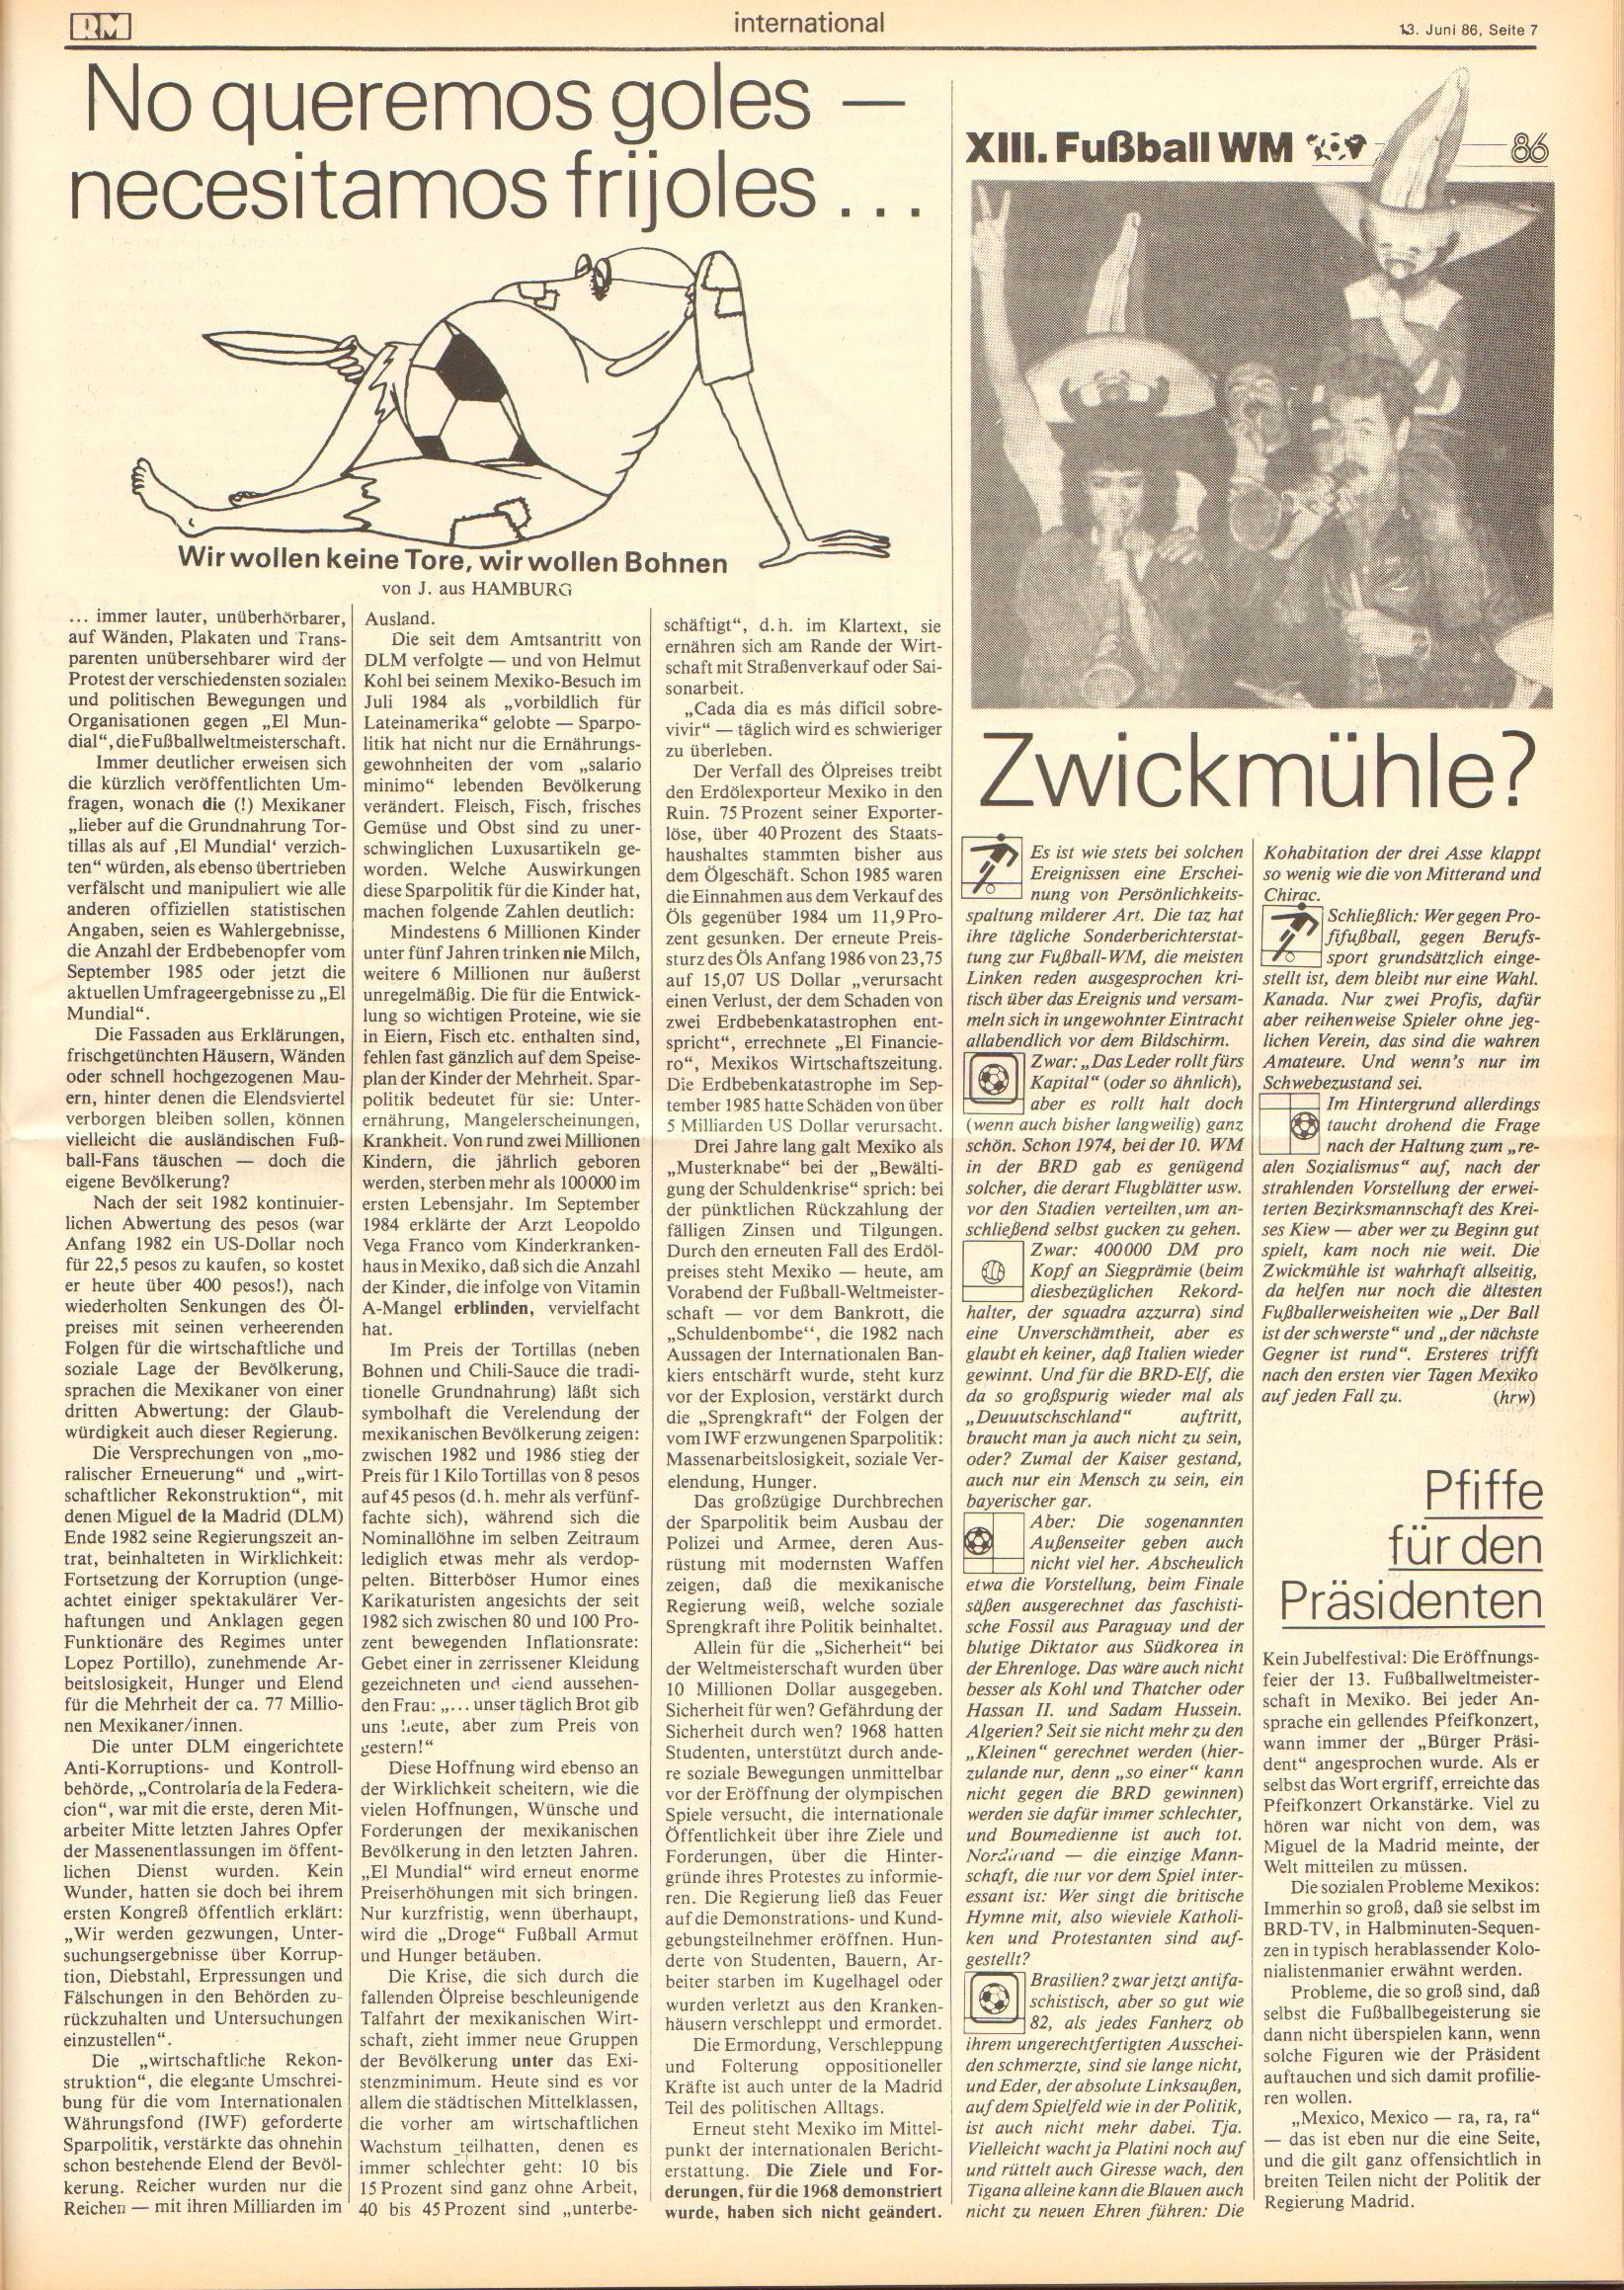 Roter Morgen, 20. Jg., 13. Juni 1986, Nr. 15, Seite 7